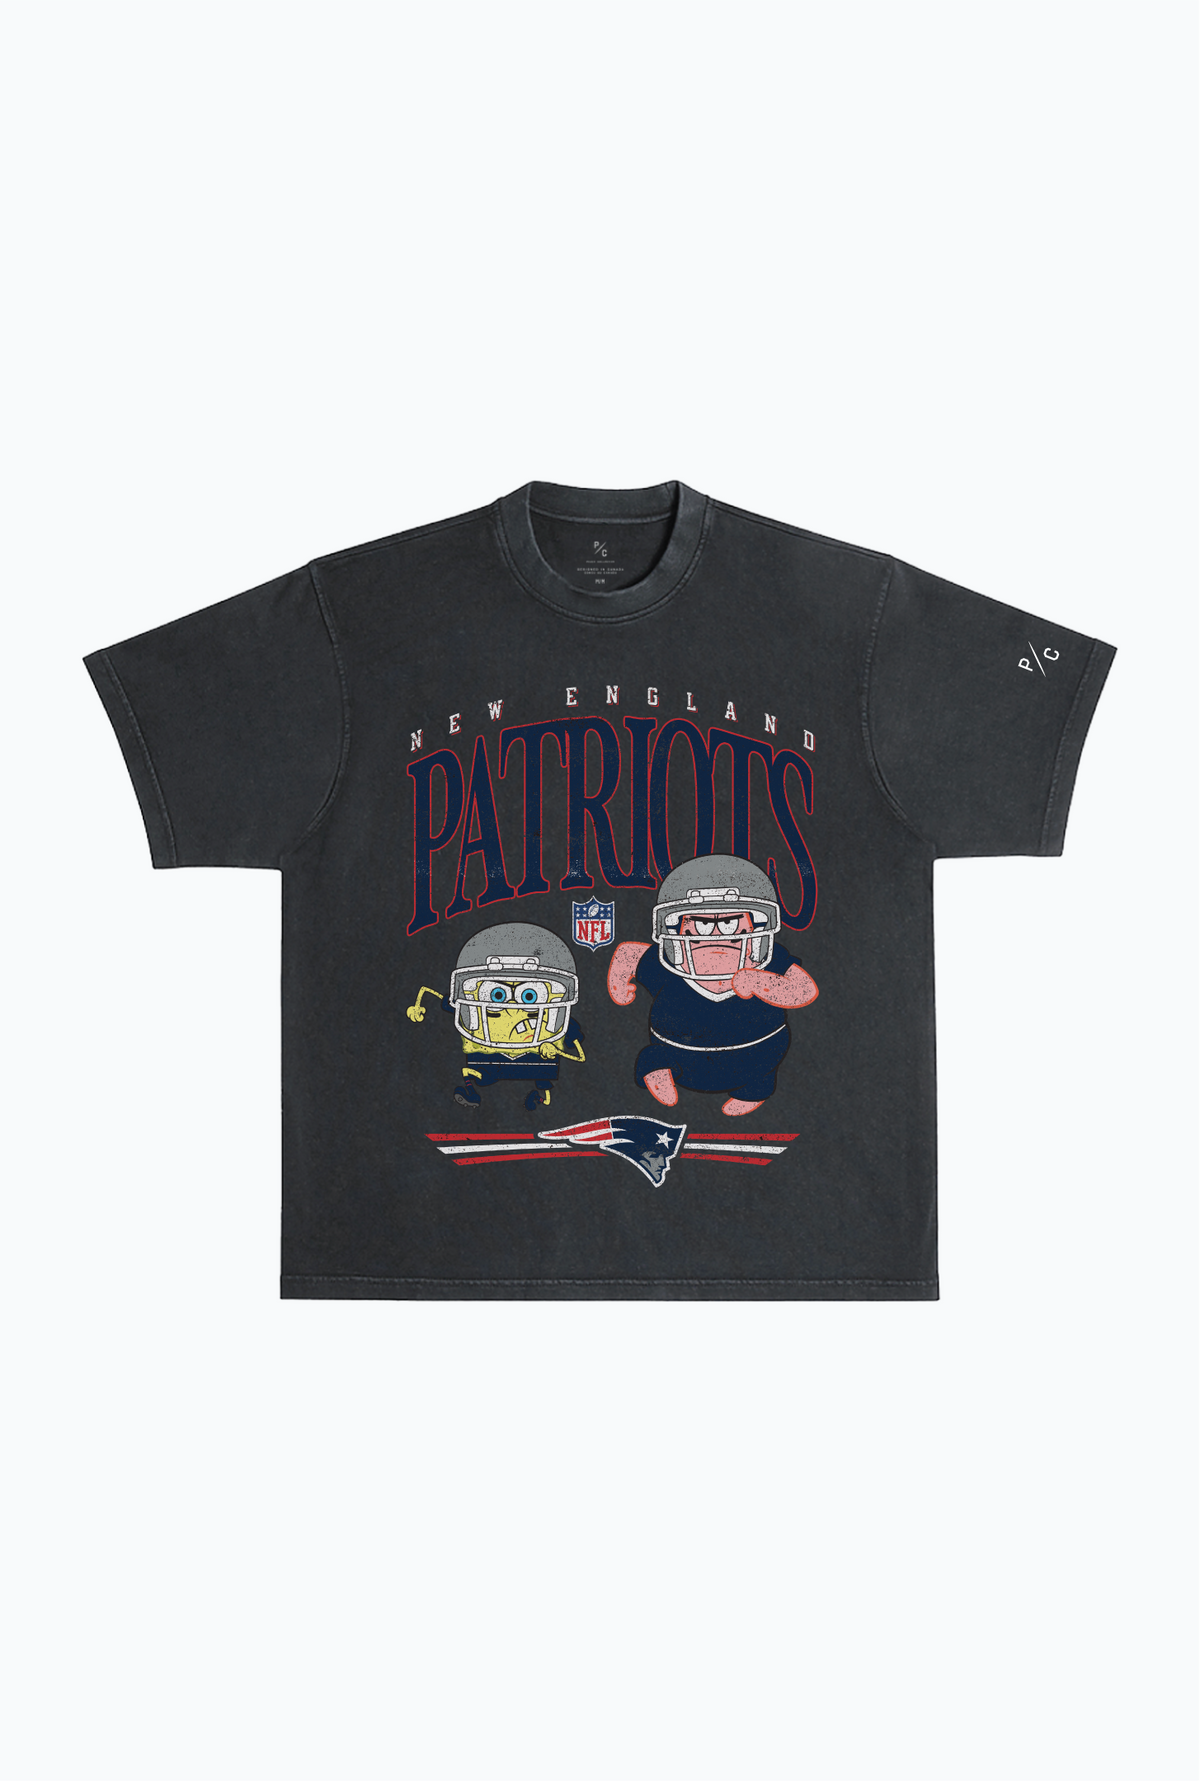 Spongebob & Patrick Rush Heavy Pigment Dye T-Shirt - New England Patriots